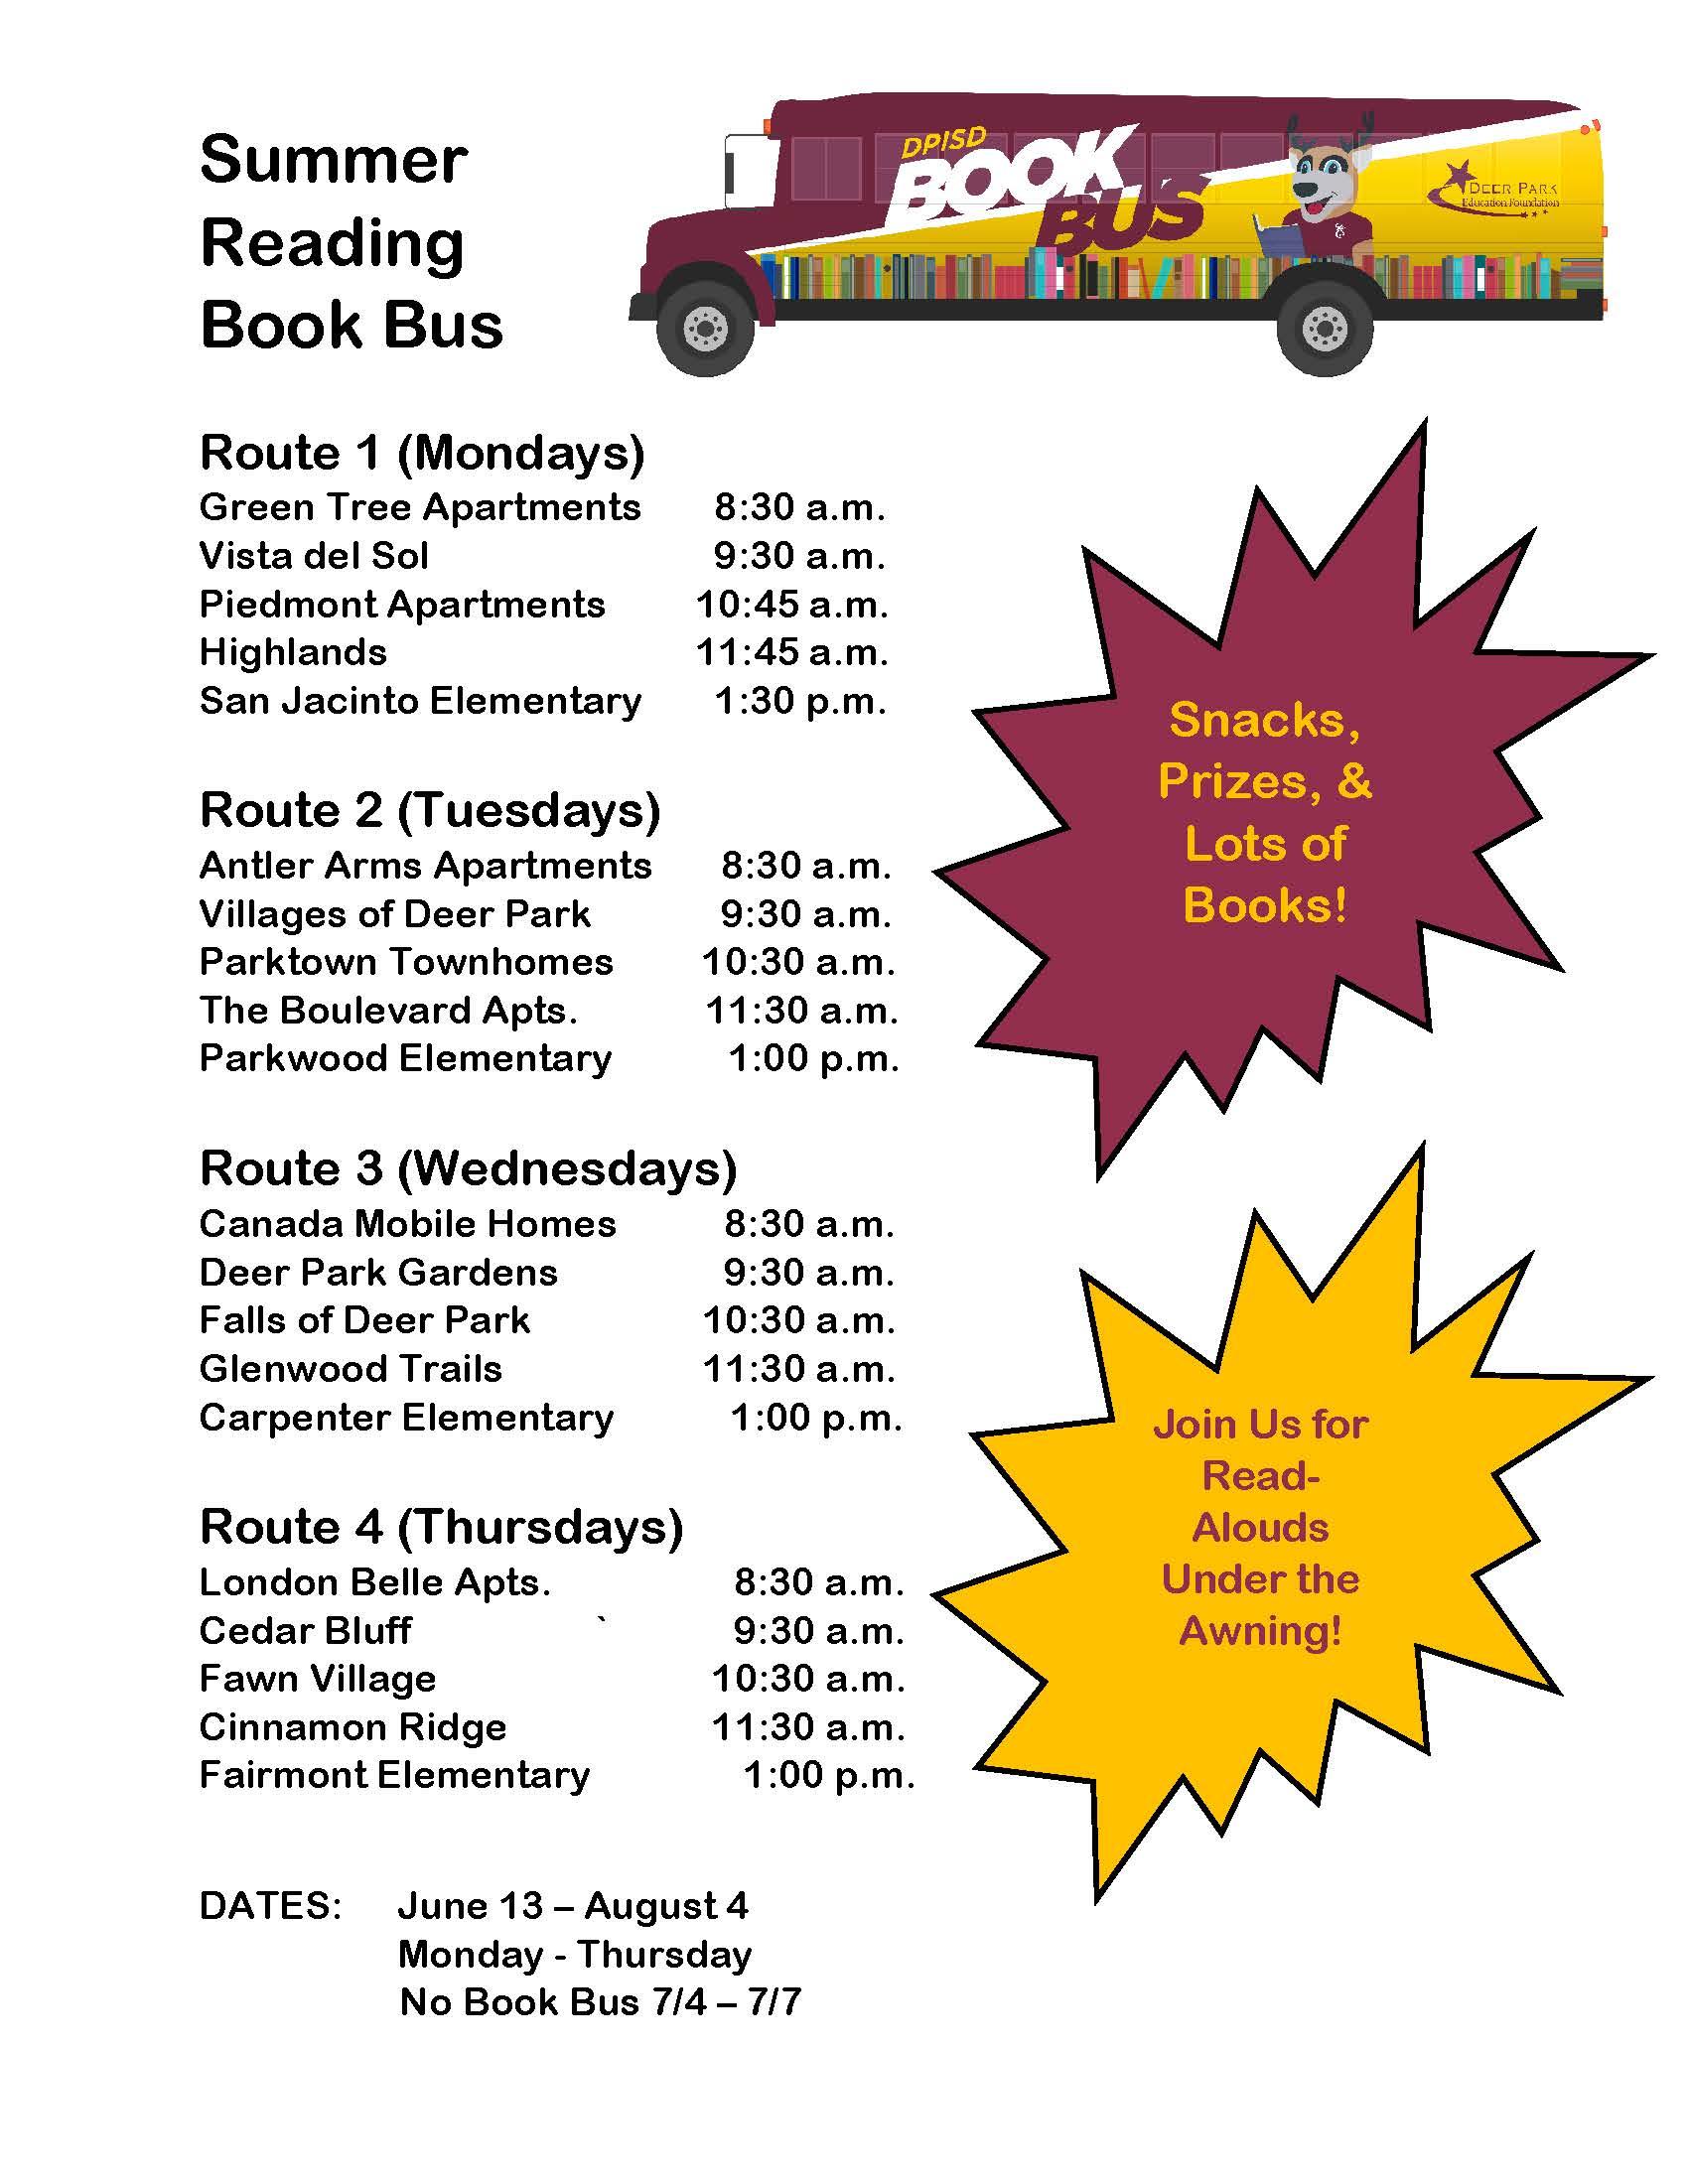 Book Bus Information Photo